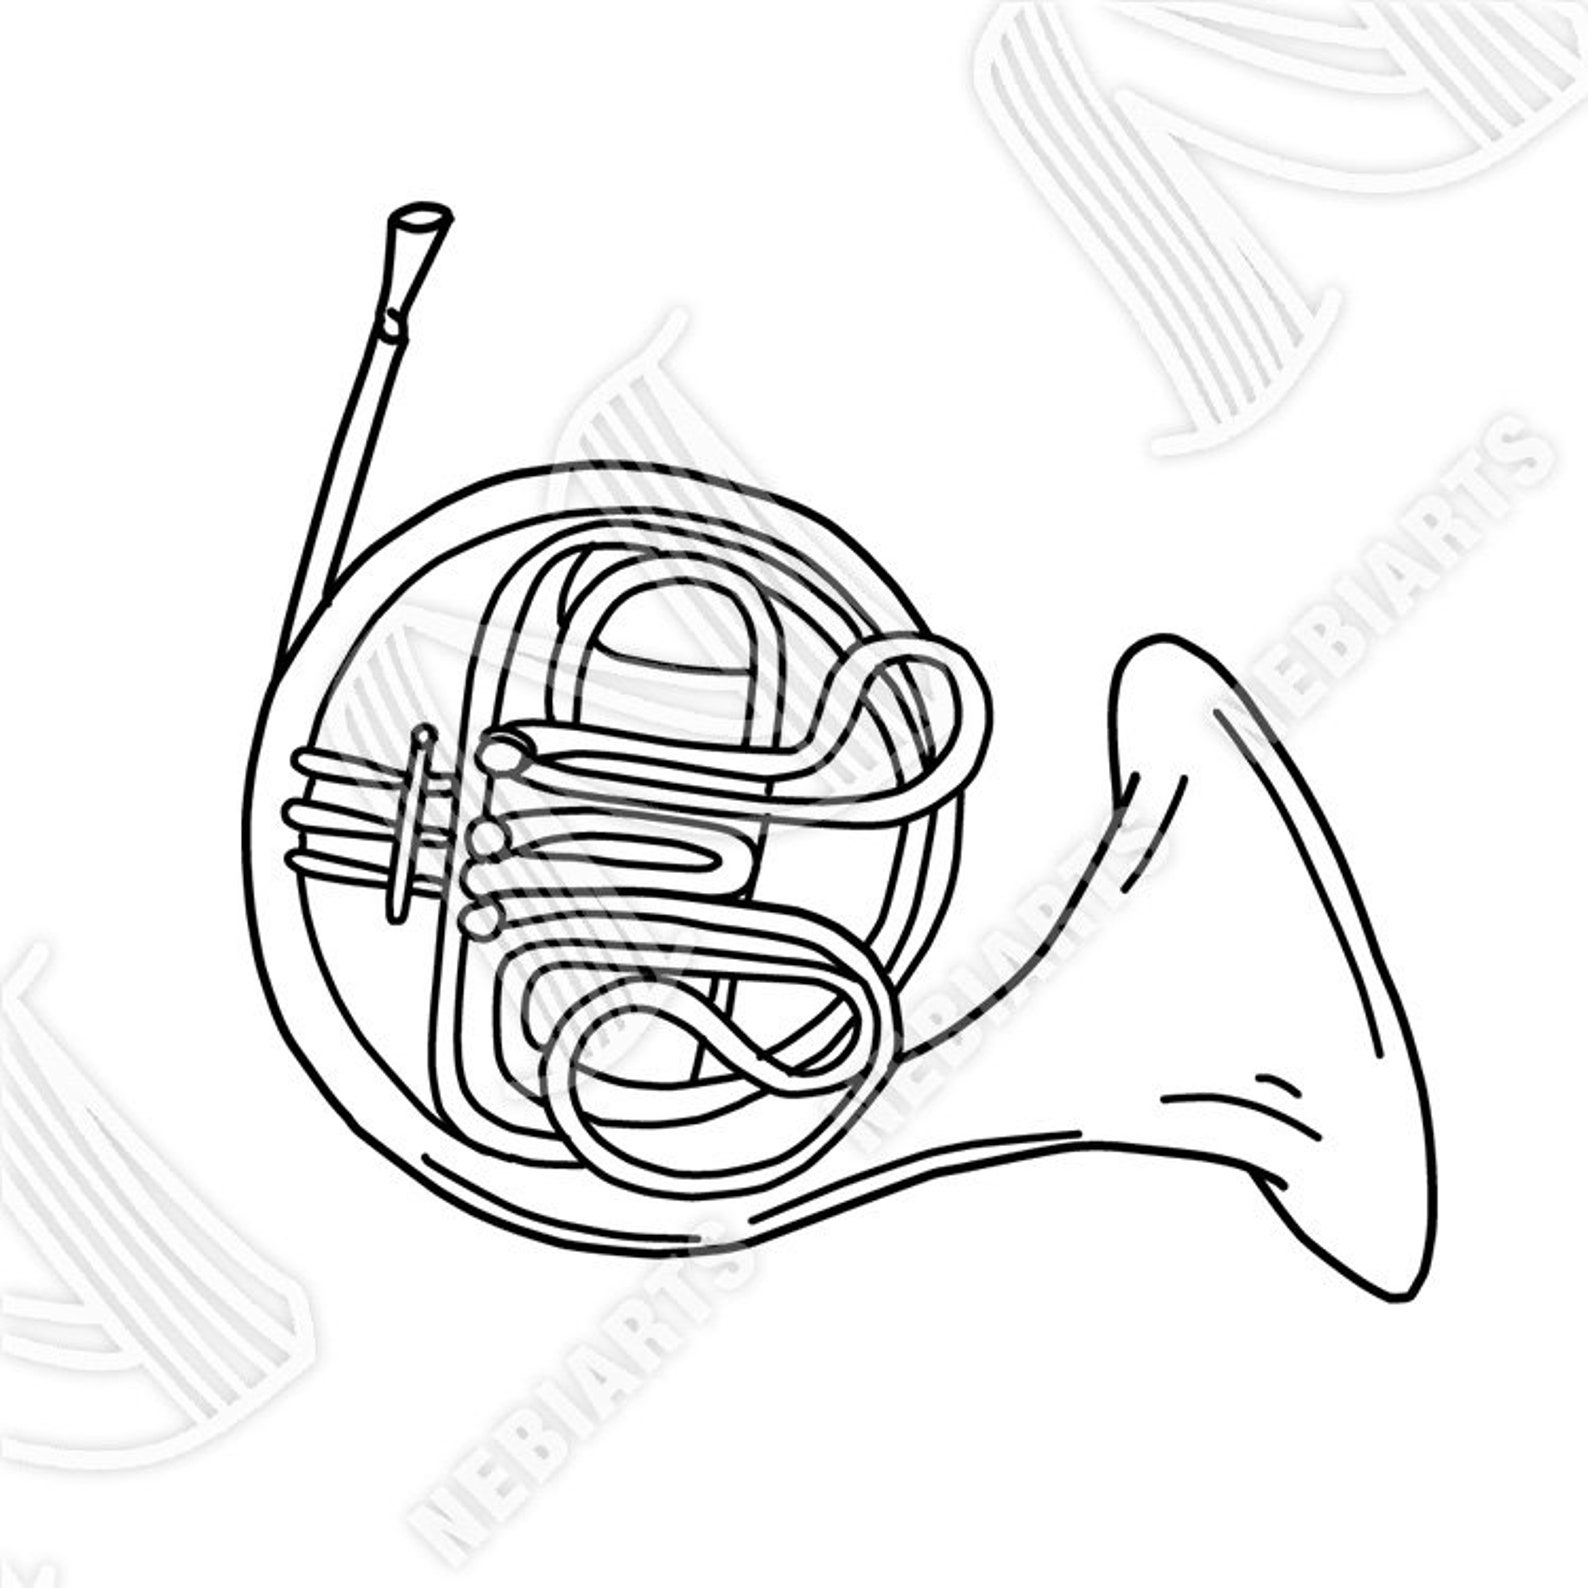 Download Instruments de musique Whiteboard Animation SVG Images Pack | Etsy